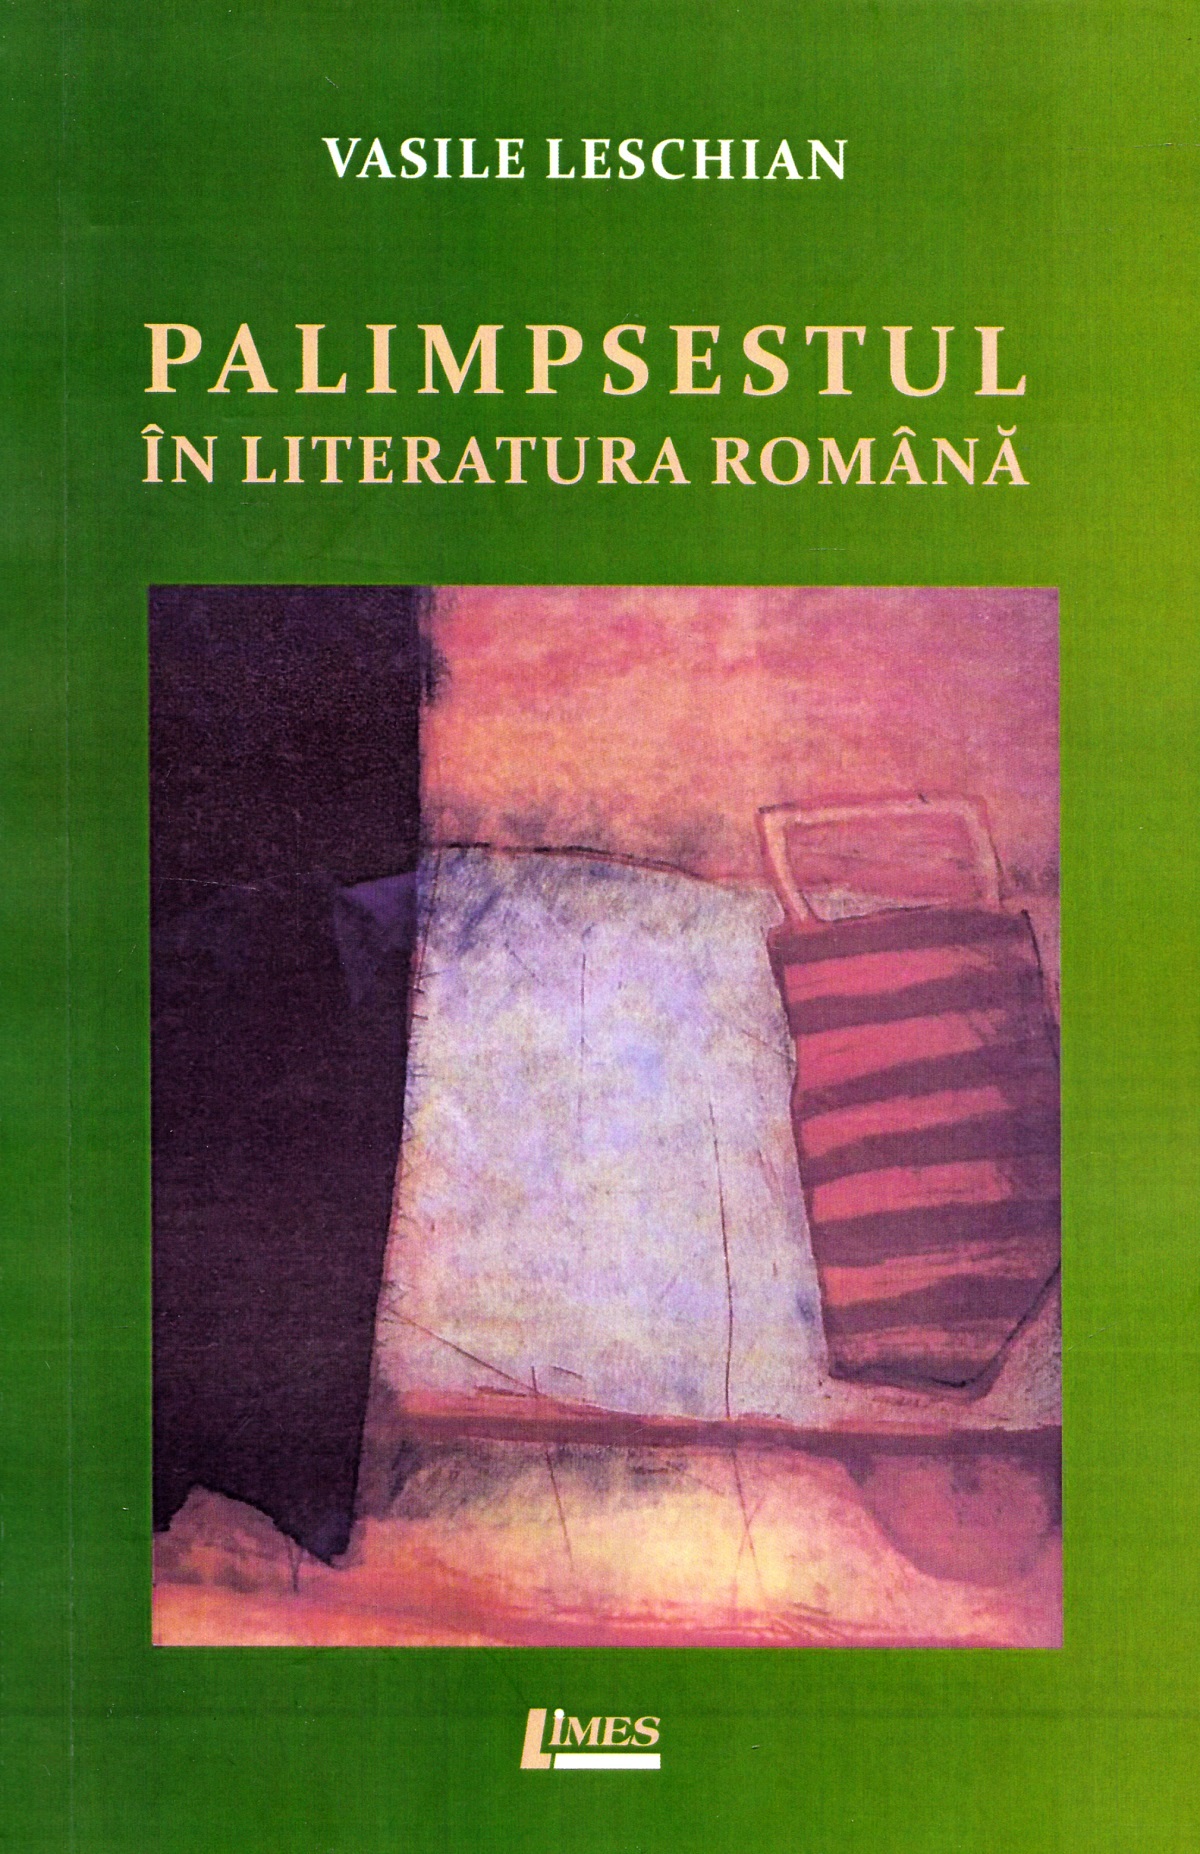 Palimpsestul in literatura romana - Vasile Leschian